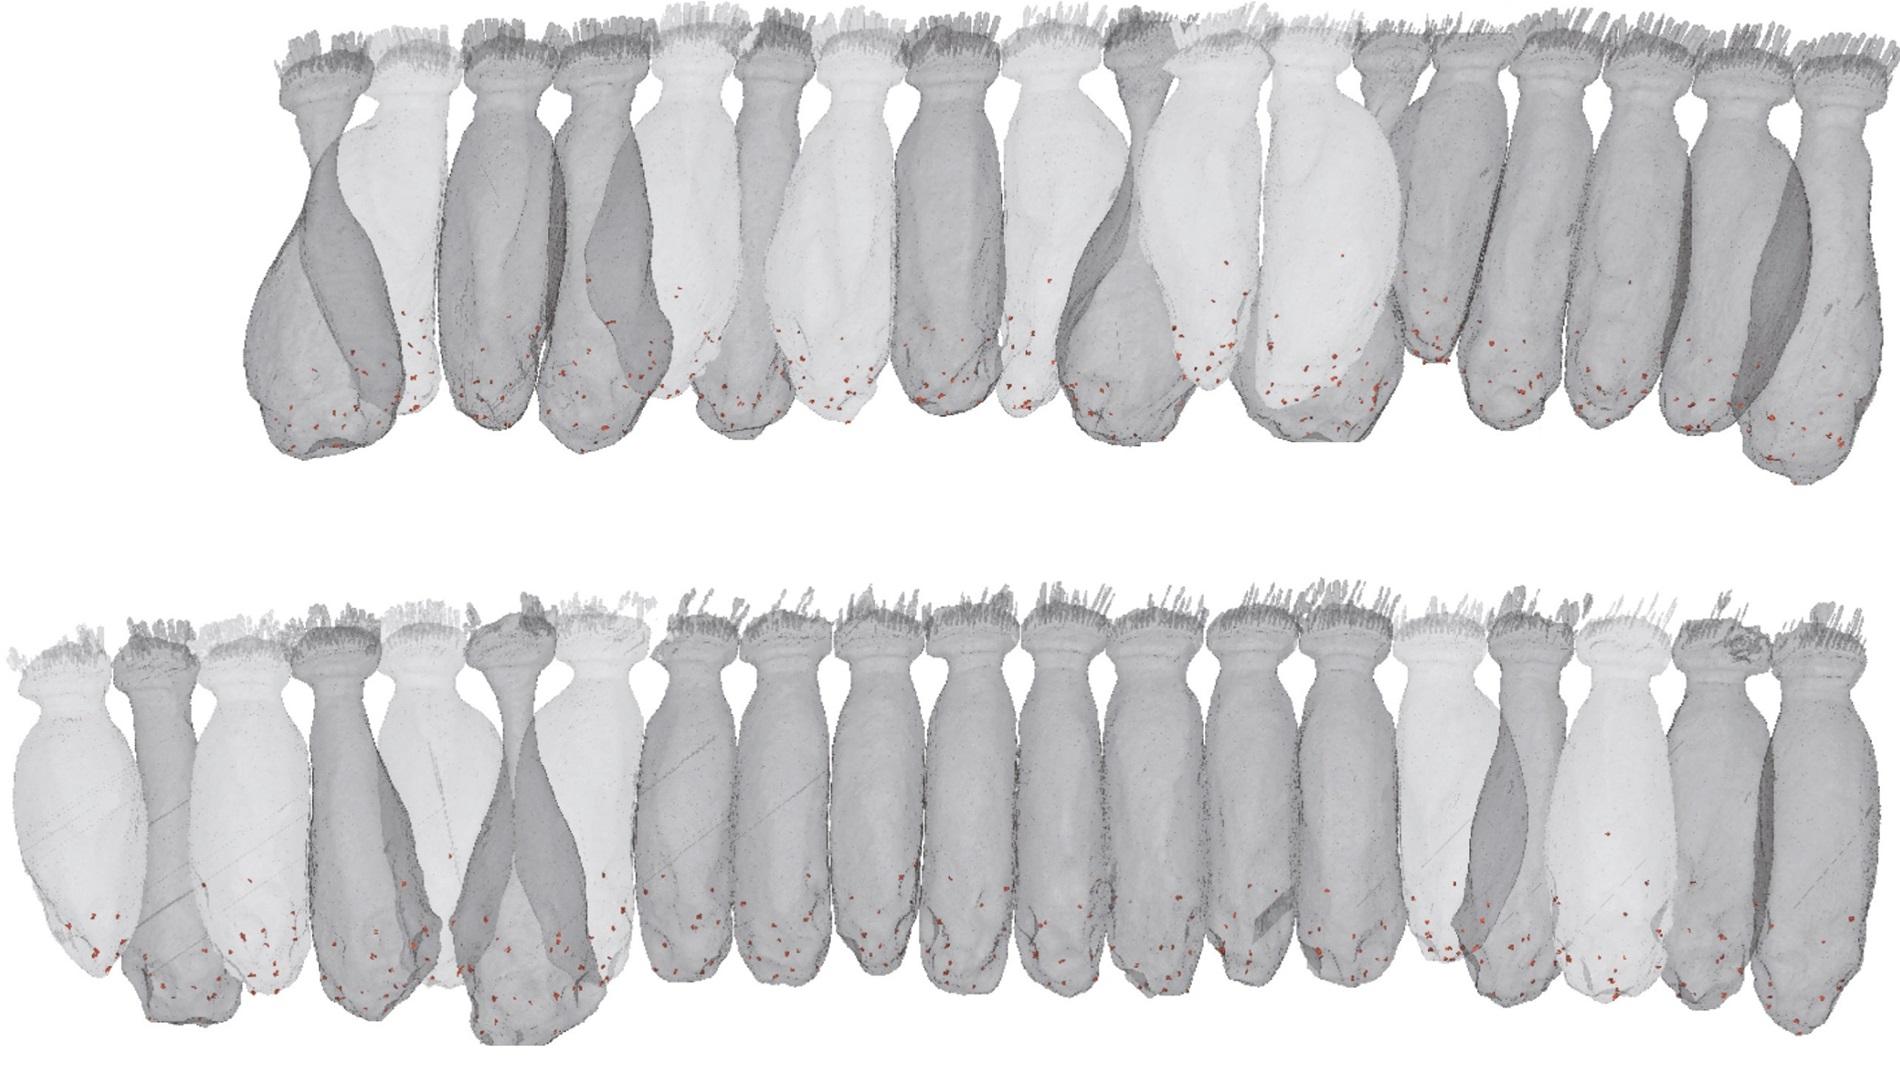 Inner Hair Cells (IHCs) imaged from SBF-SEM